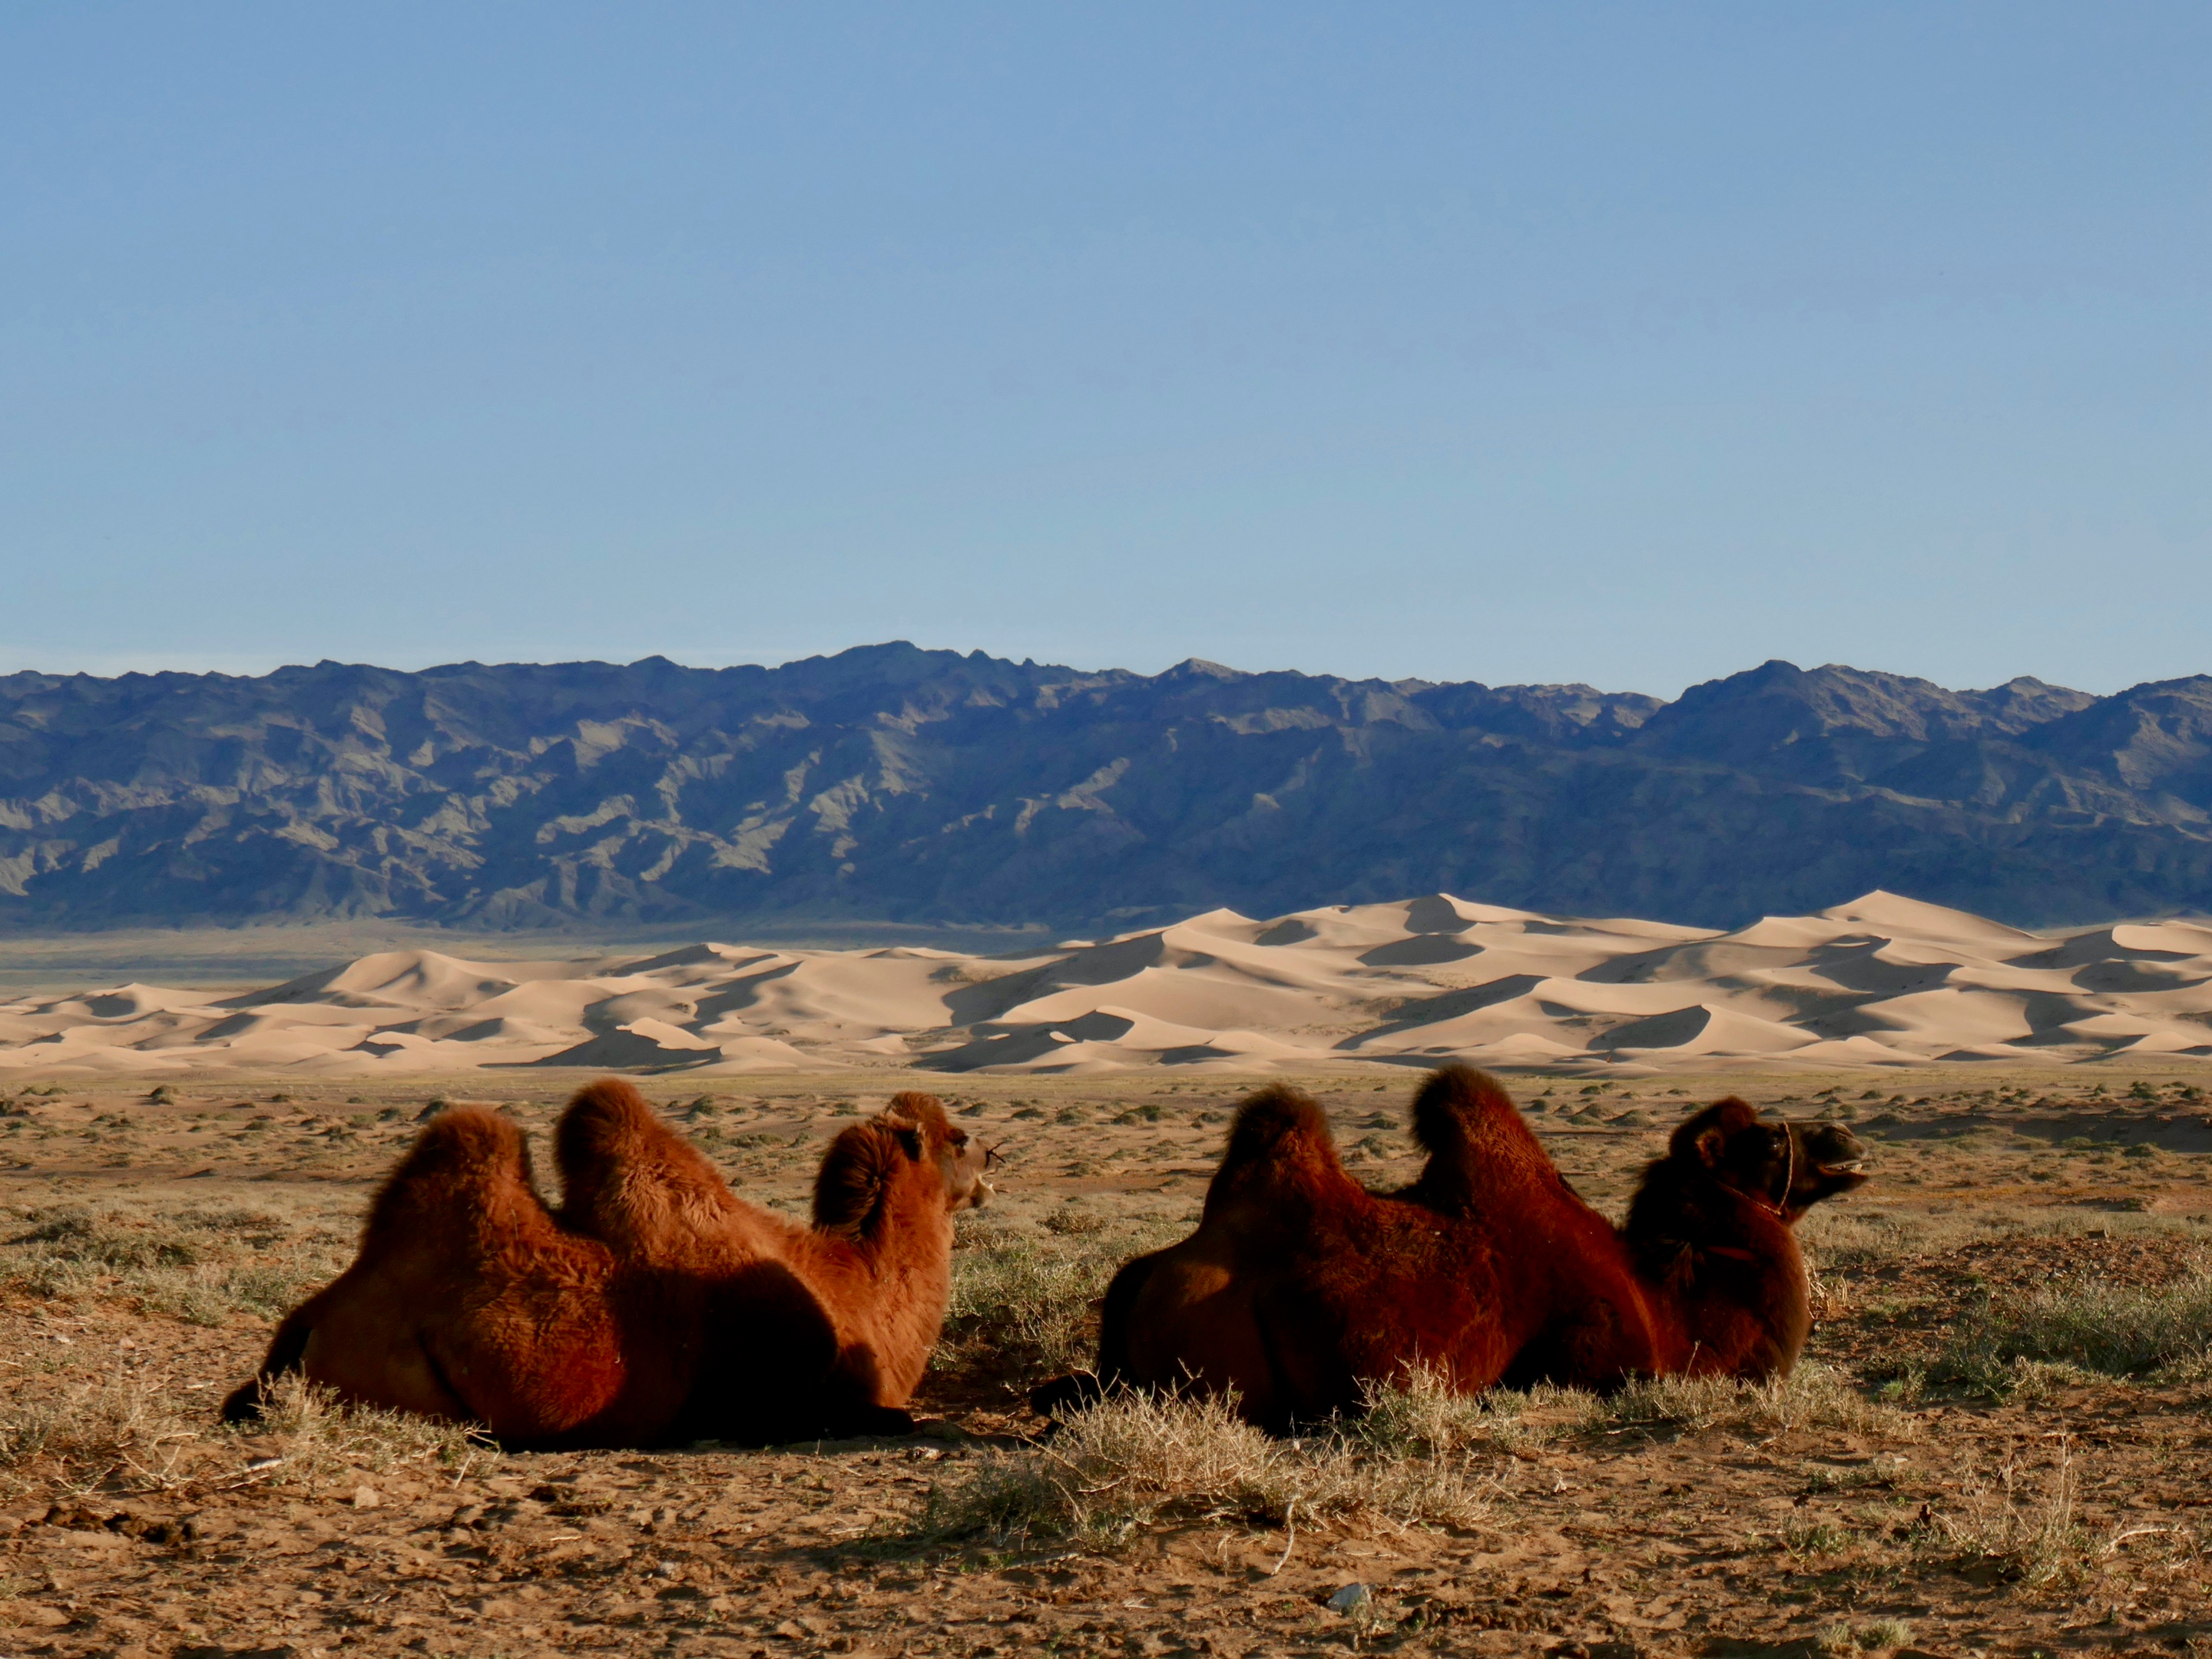 A breathtaking view of the Gobi Desert in Mongolia